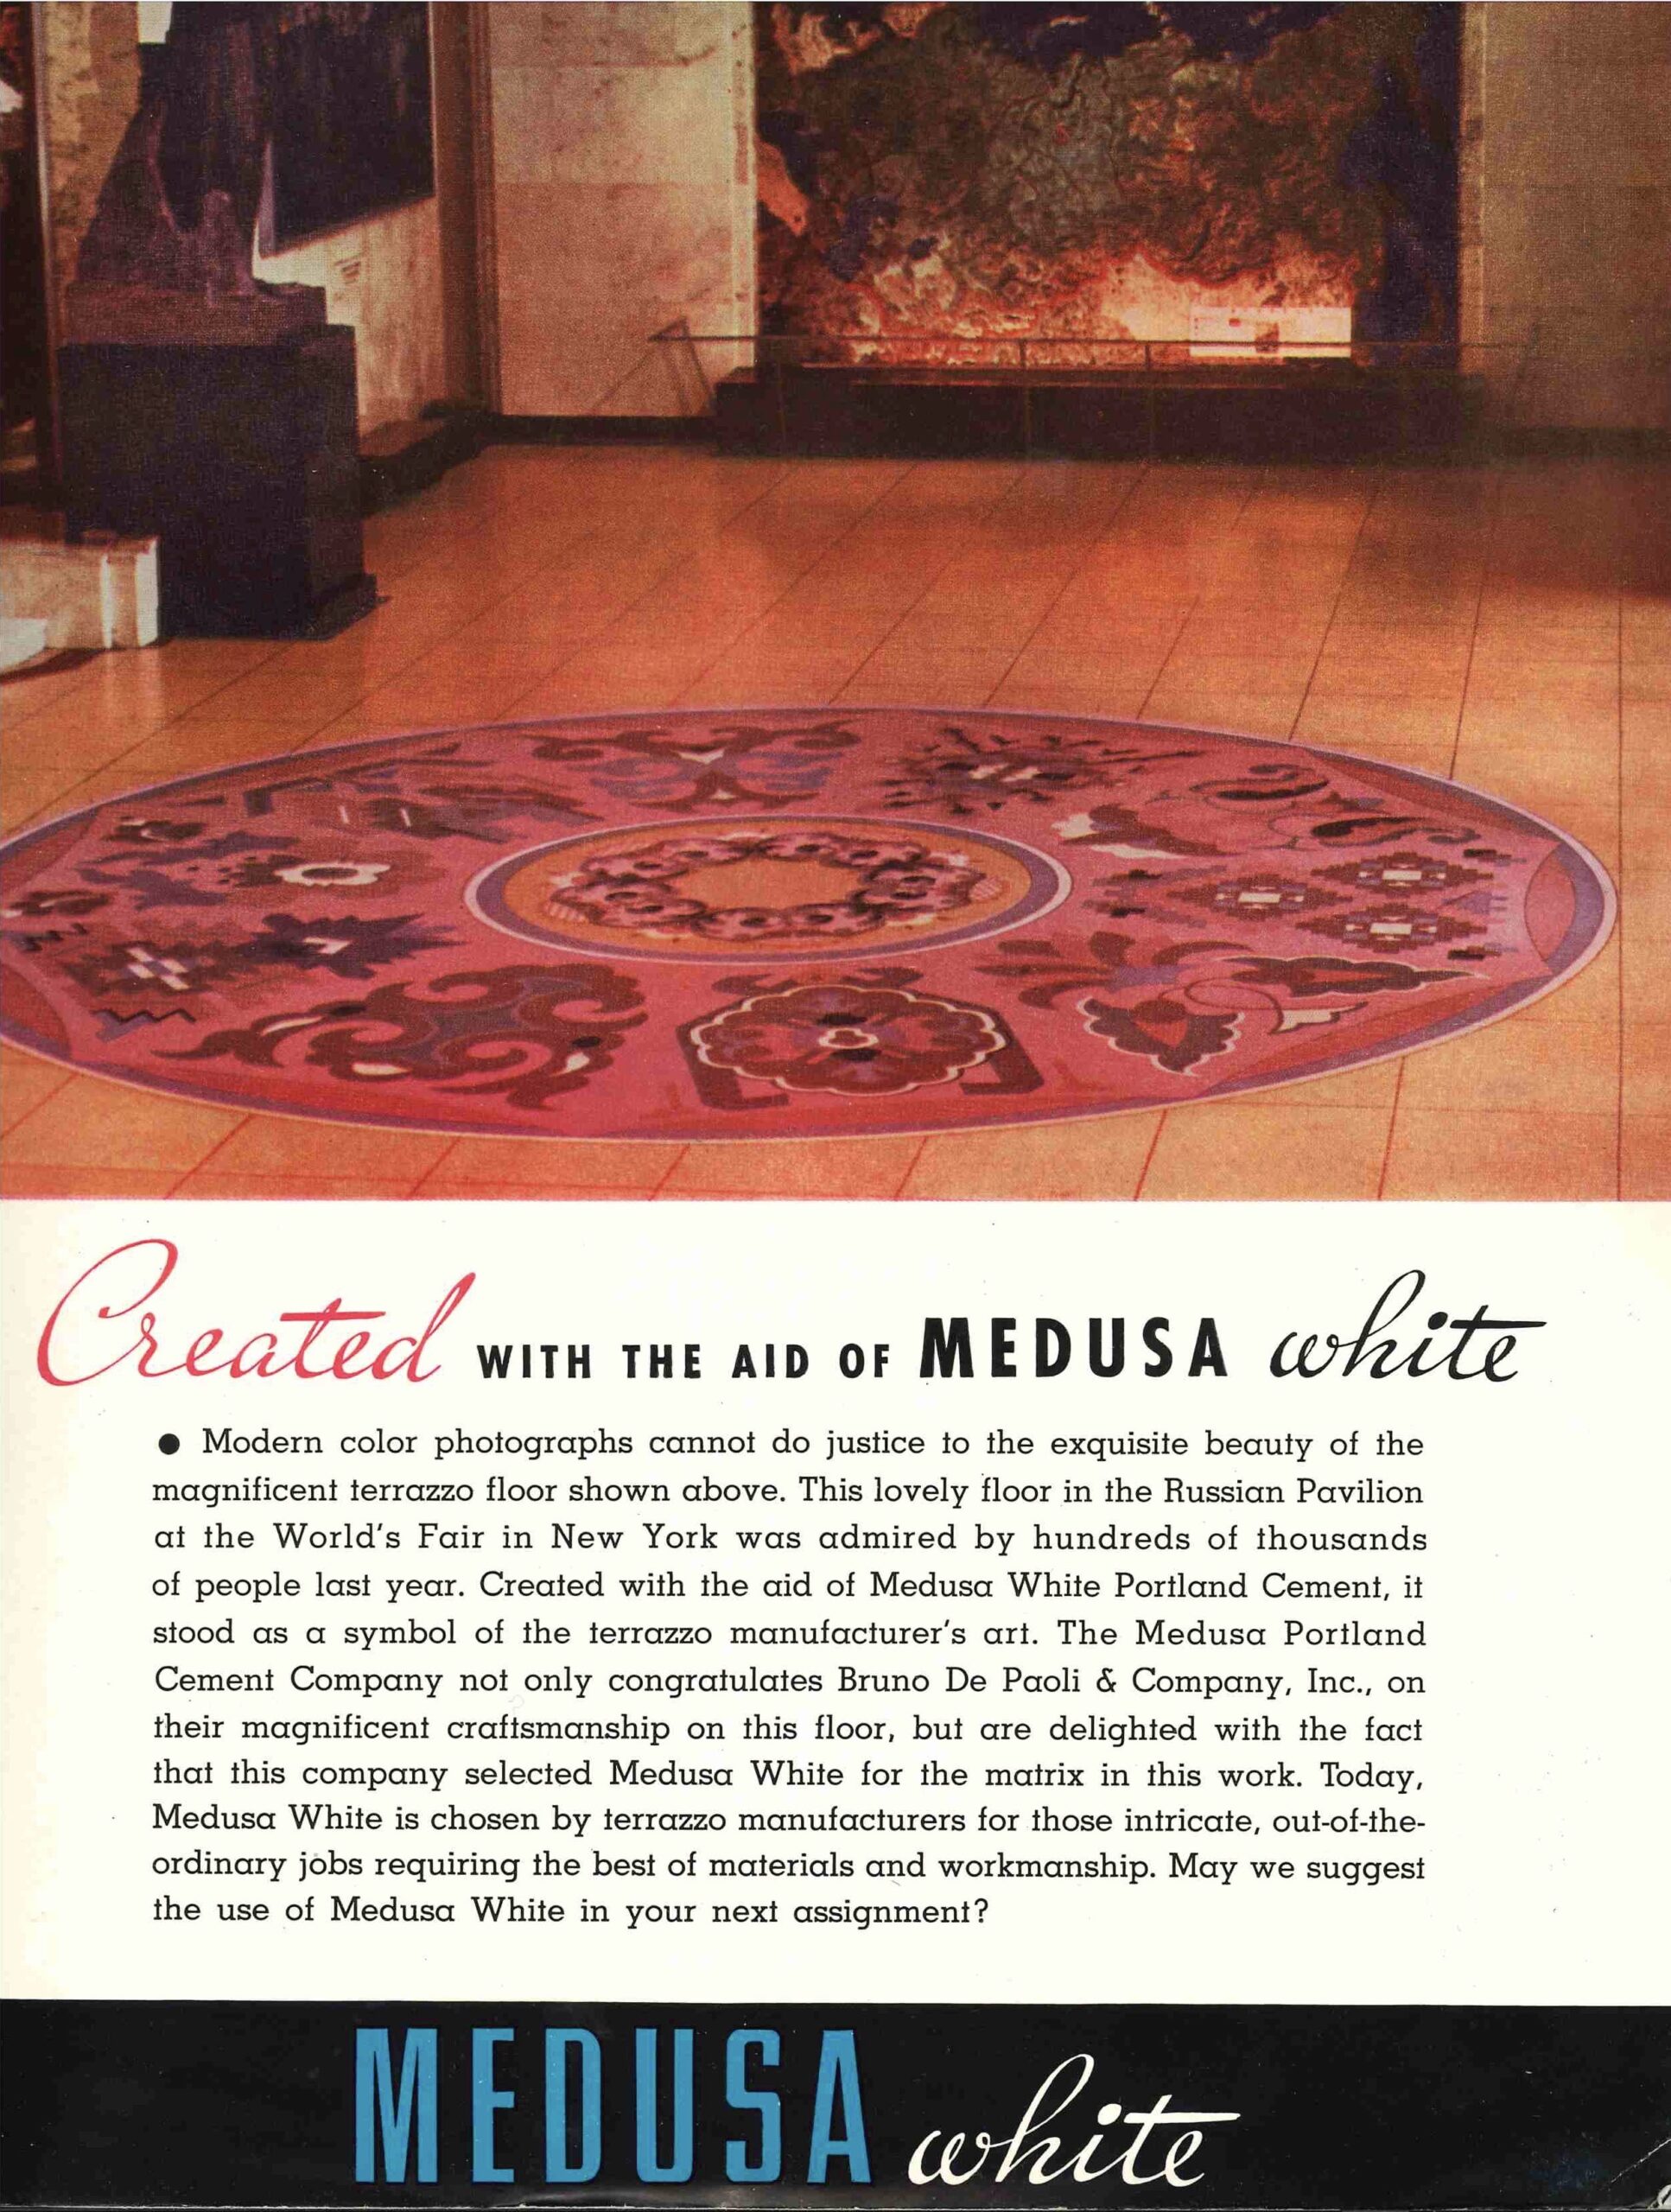 Medusa White 1940